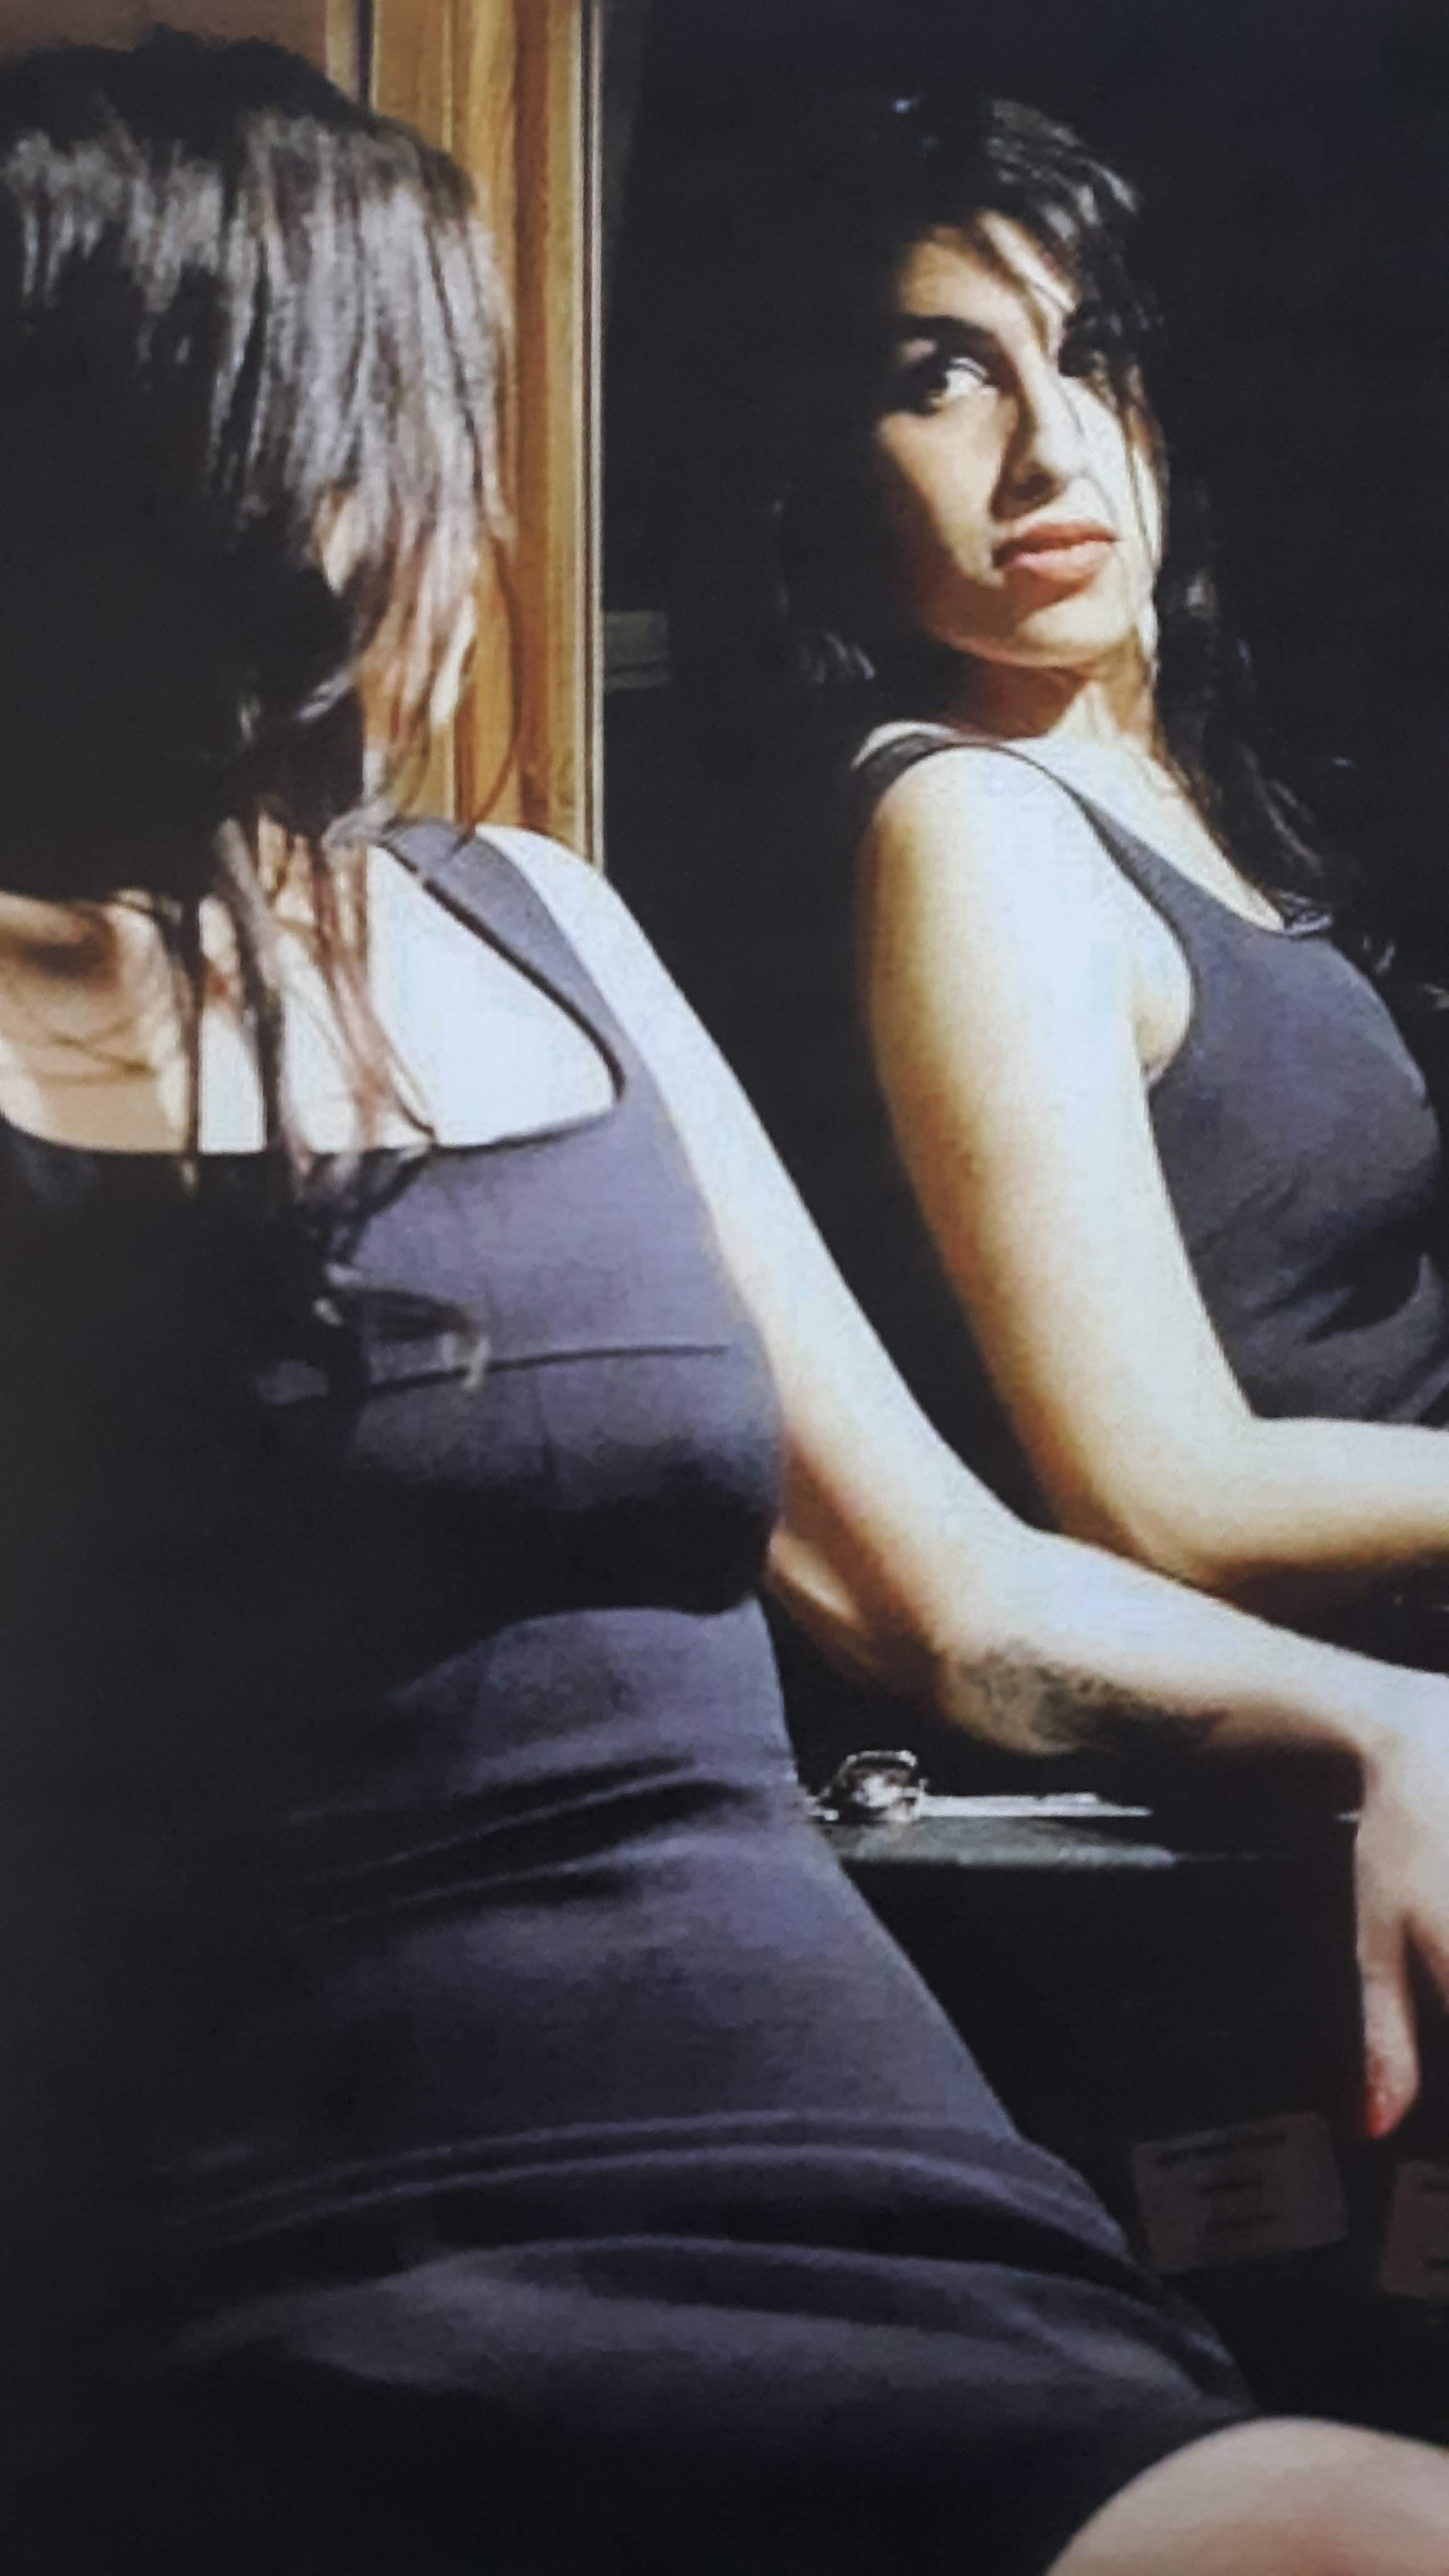 Amy Winehouse mirror image